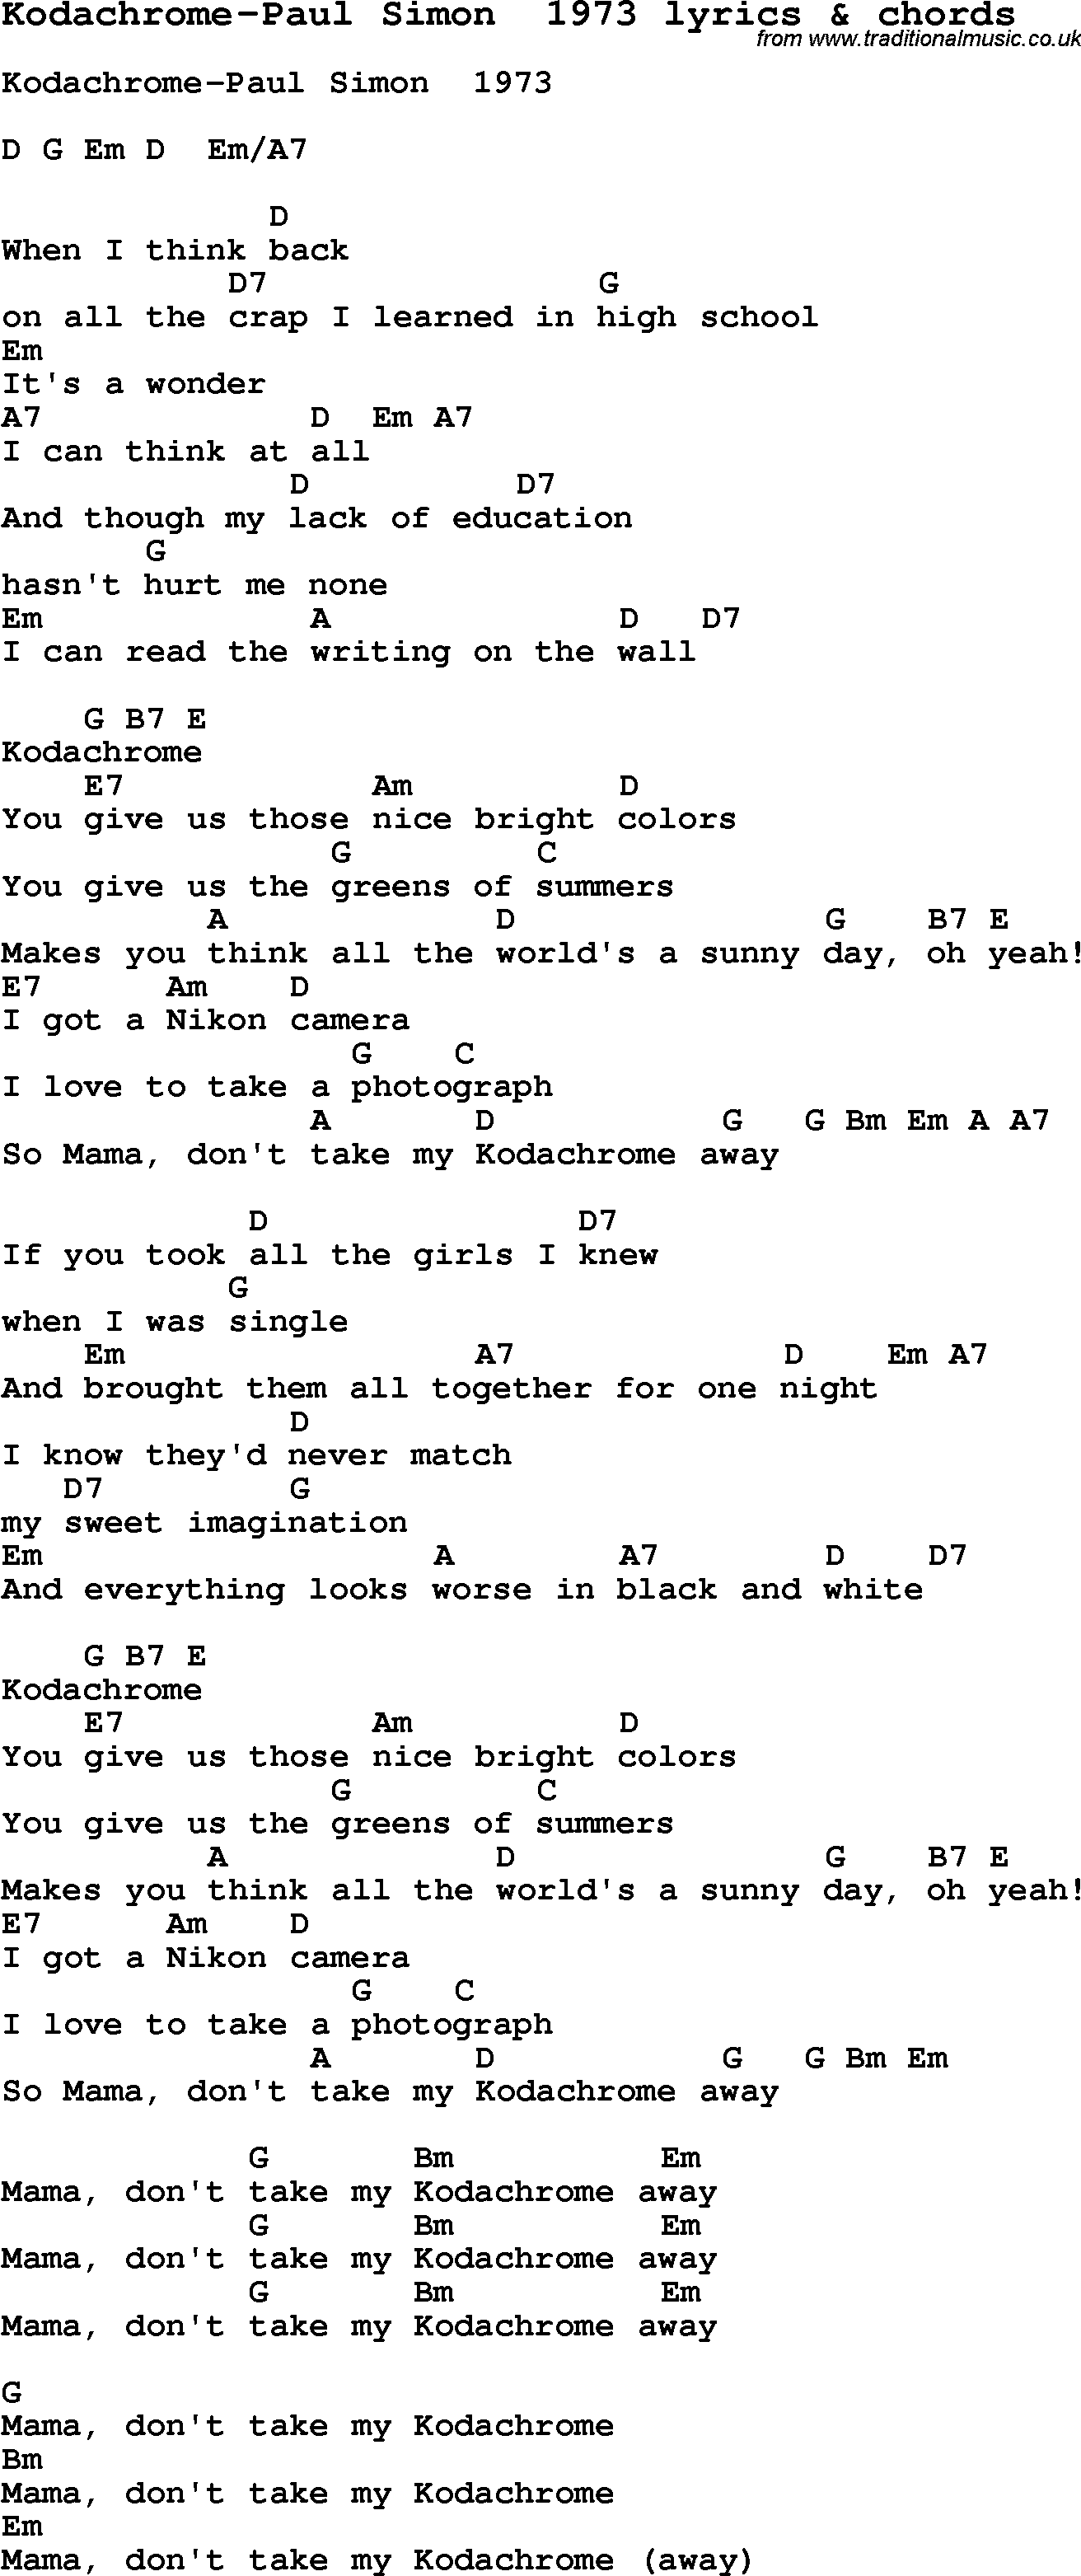 Love Song Lyrics for: Kodachrome-Paul Simon  1973 with chords for Ukulele, Guitar Banjo etc.